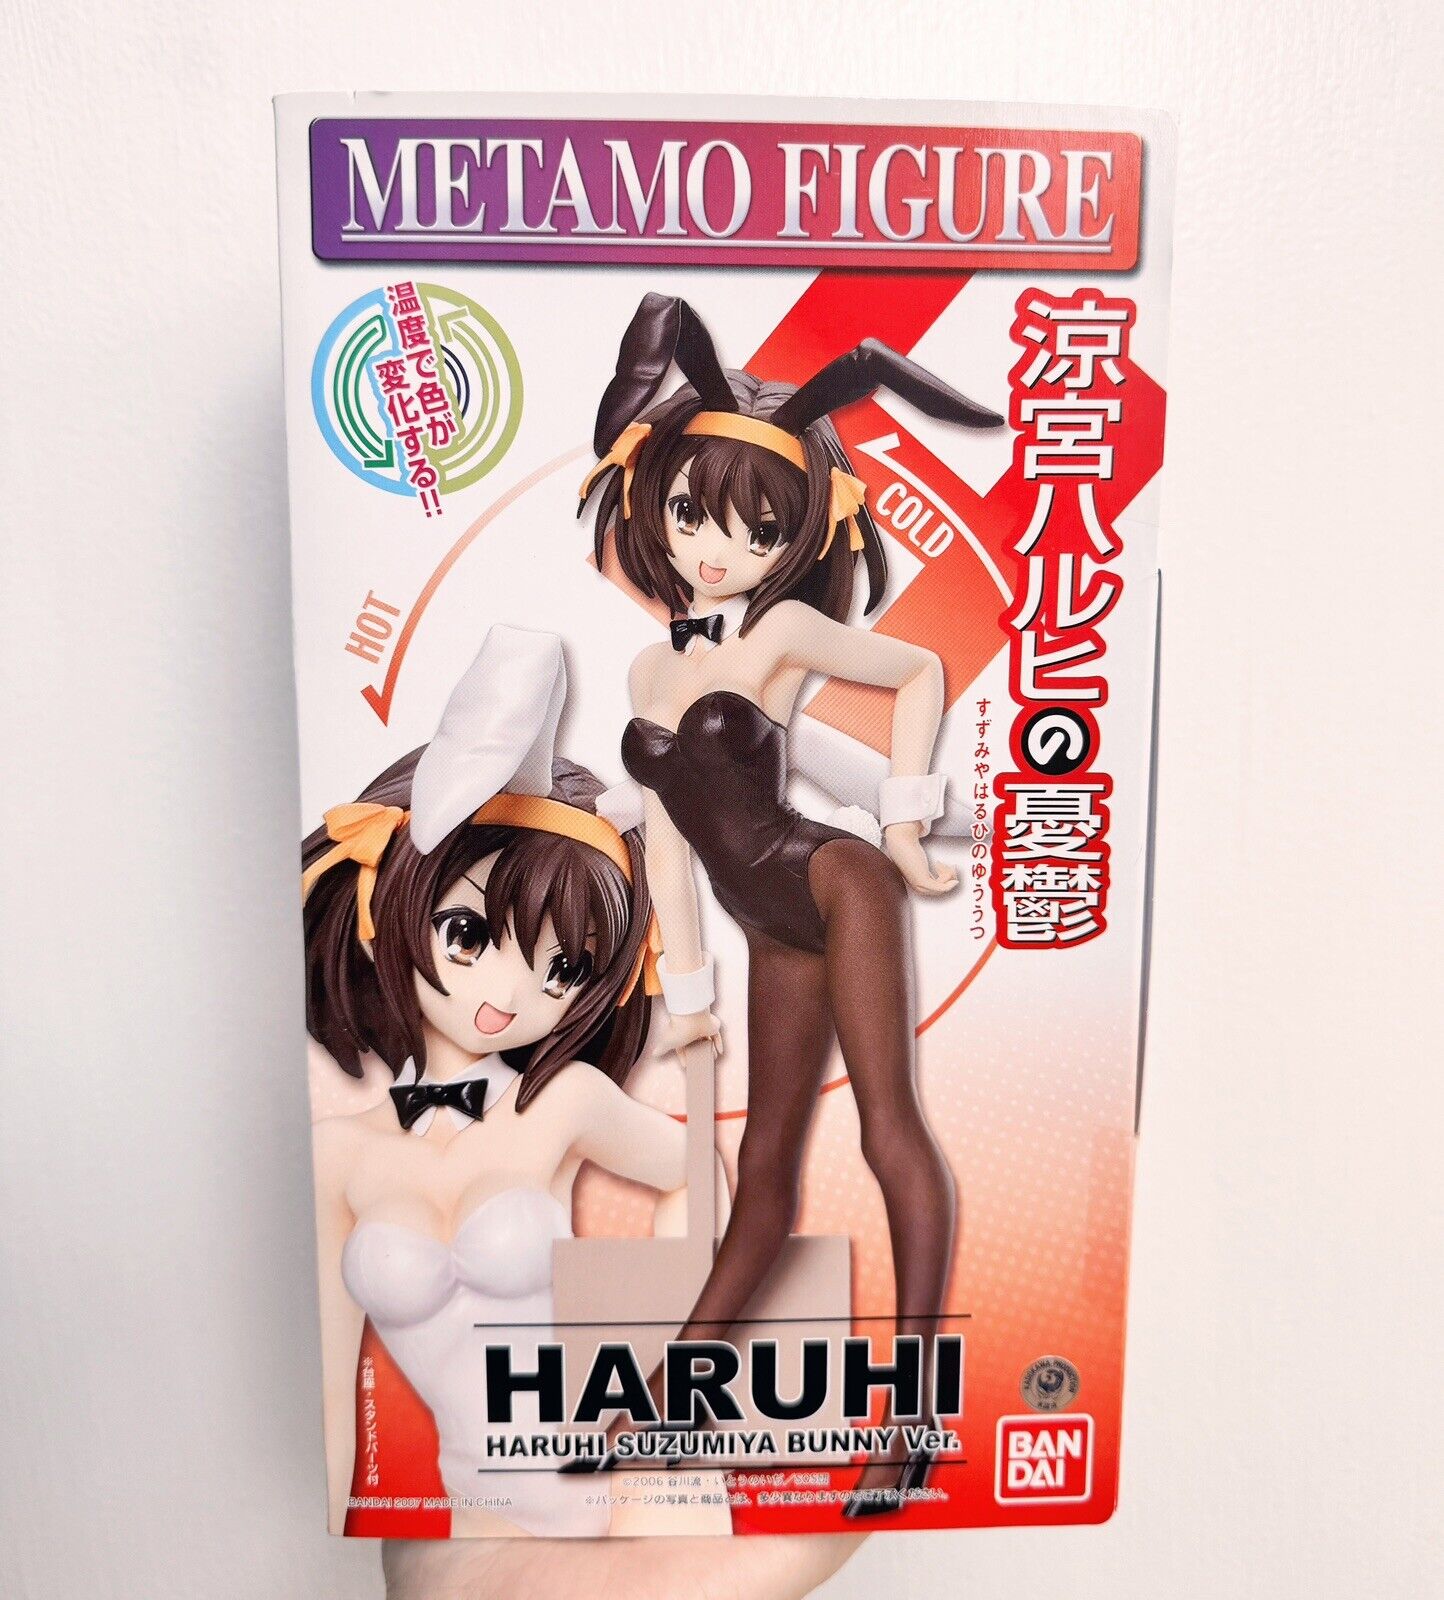 Sexy Anime Girl HARUHI SUZUMIYA Bunny ver. Bandai Metamo figure Goth Dress NIB